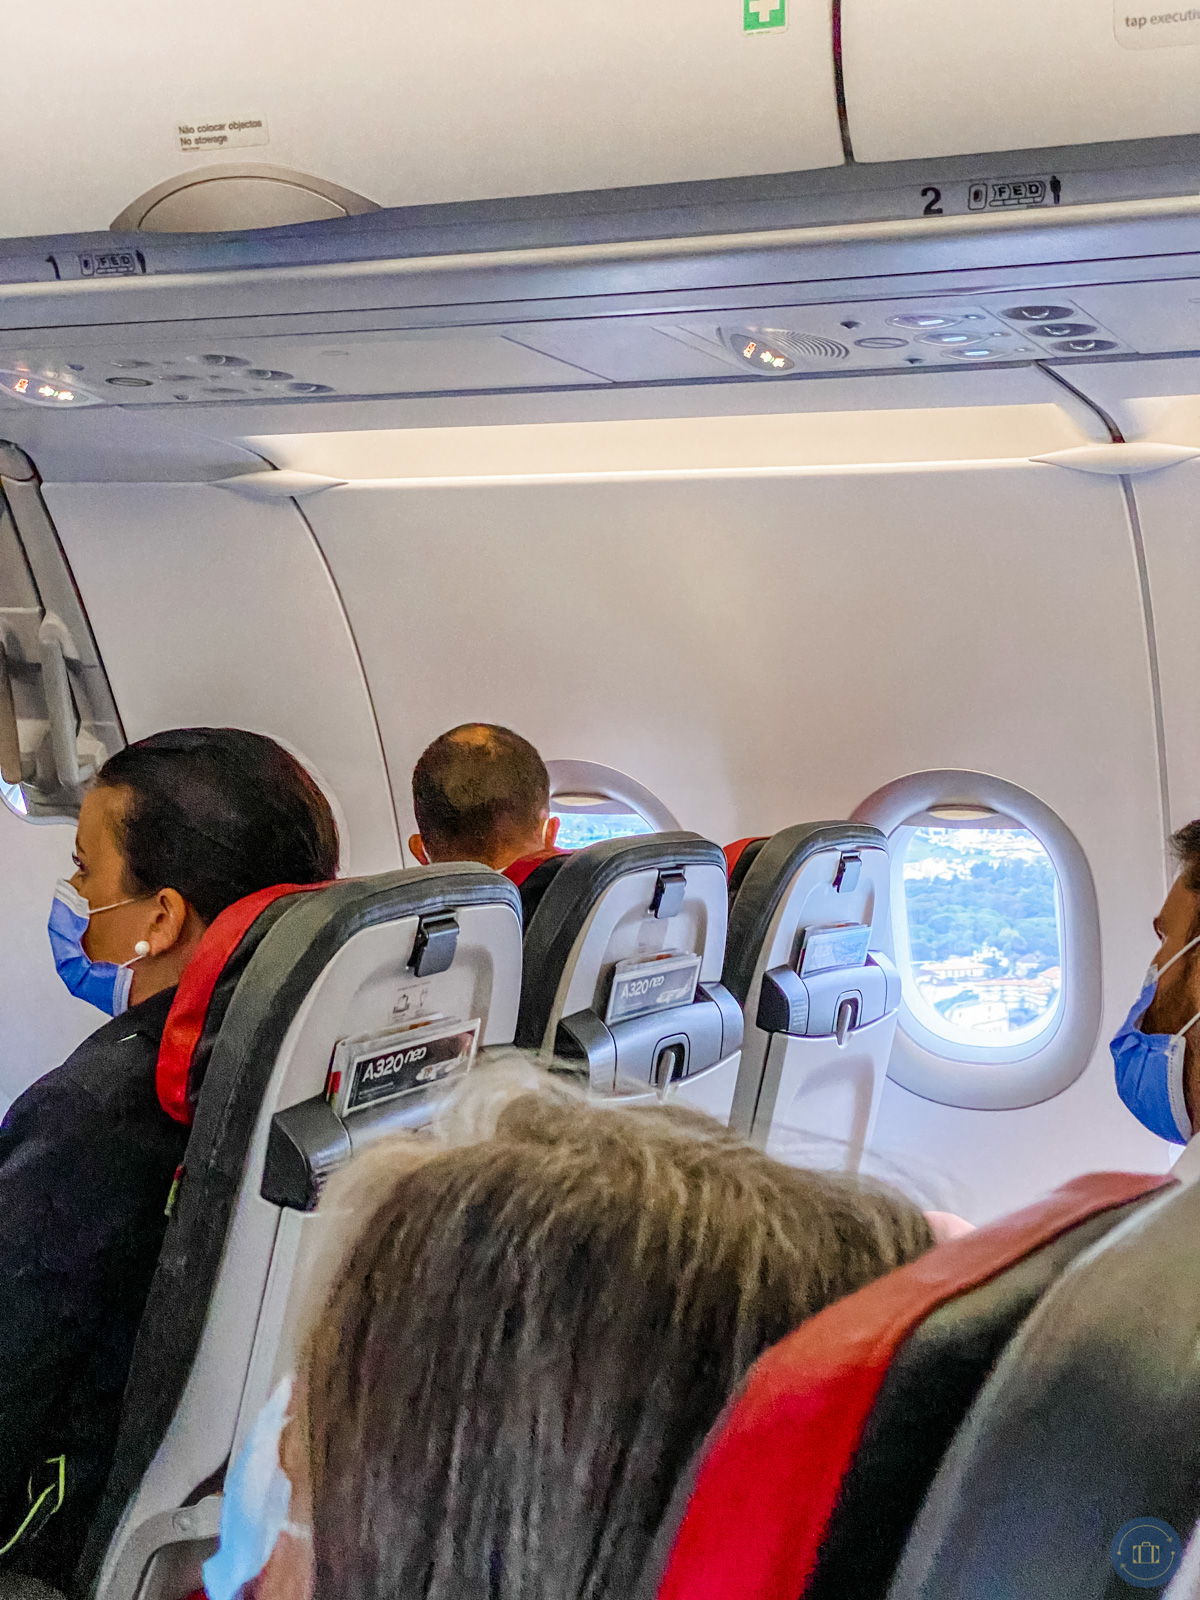 tap portugal executive class seats on portugal short-haul flight